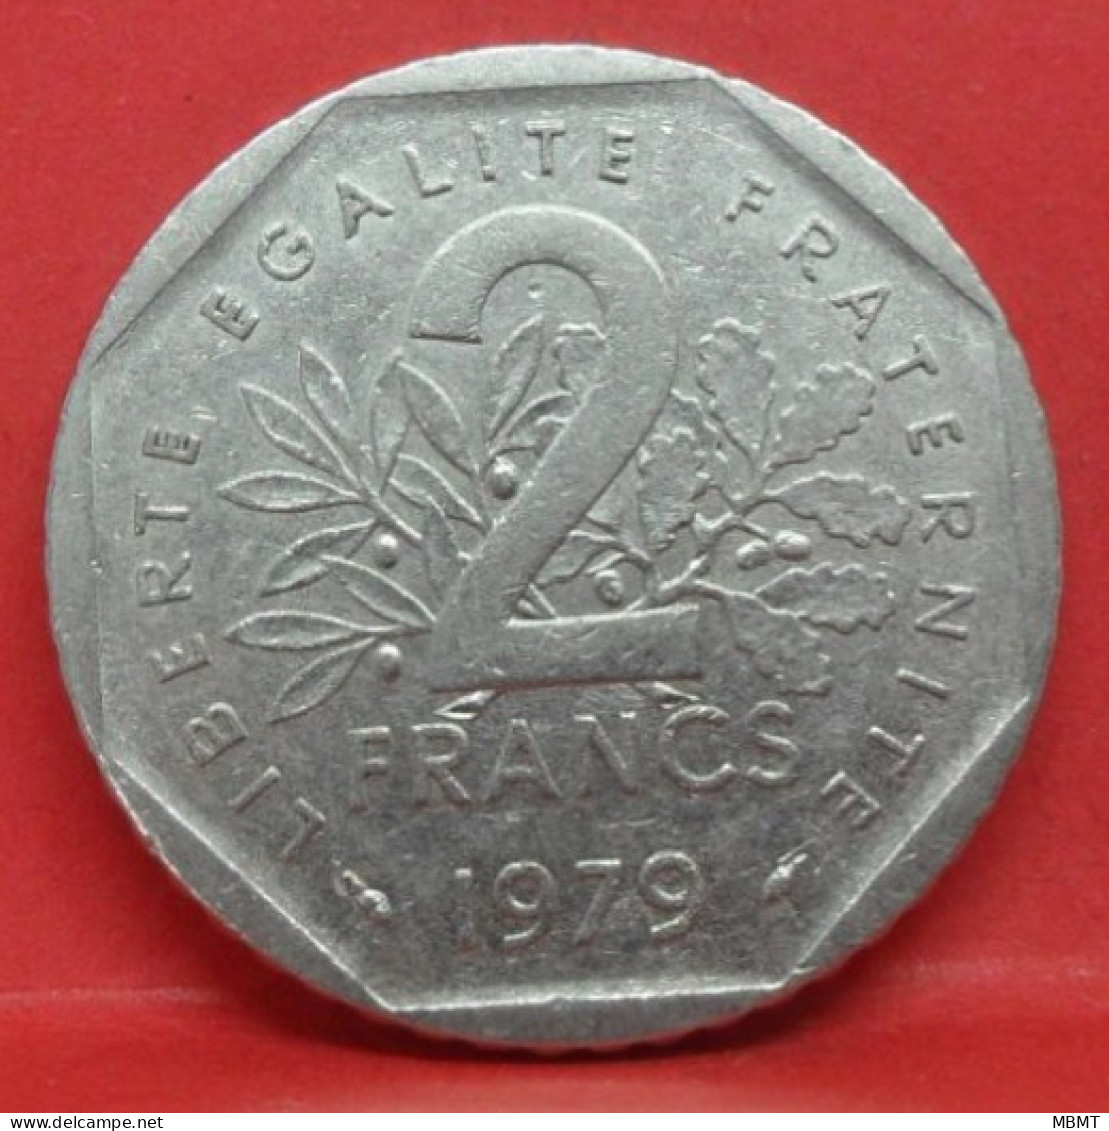 2 Francs Semeuse 1979 - TTB - Pièce Monnaie France - Article N°796 - 2 Francs